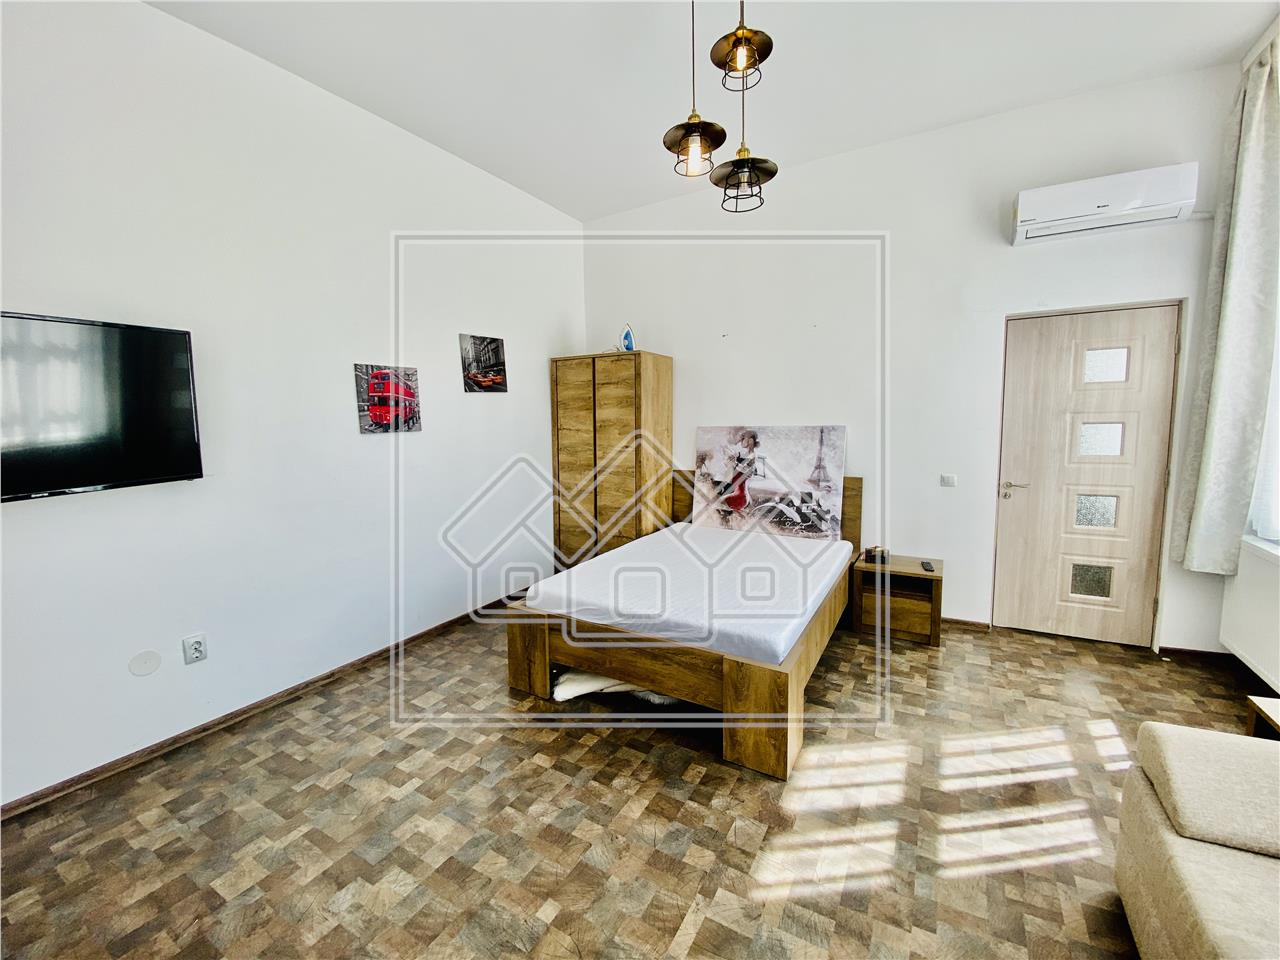 Studio for sale in Sibiu - floor 1/2 - Central area